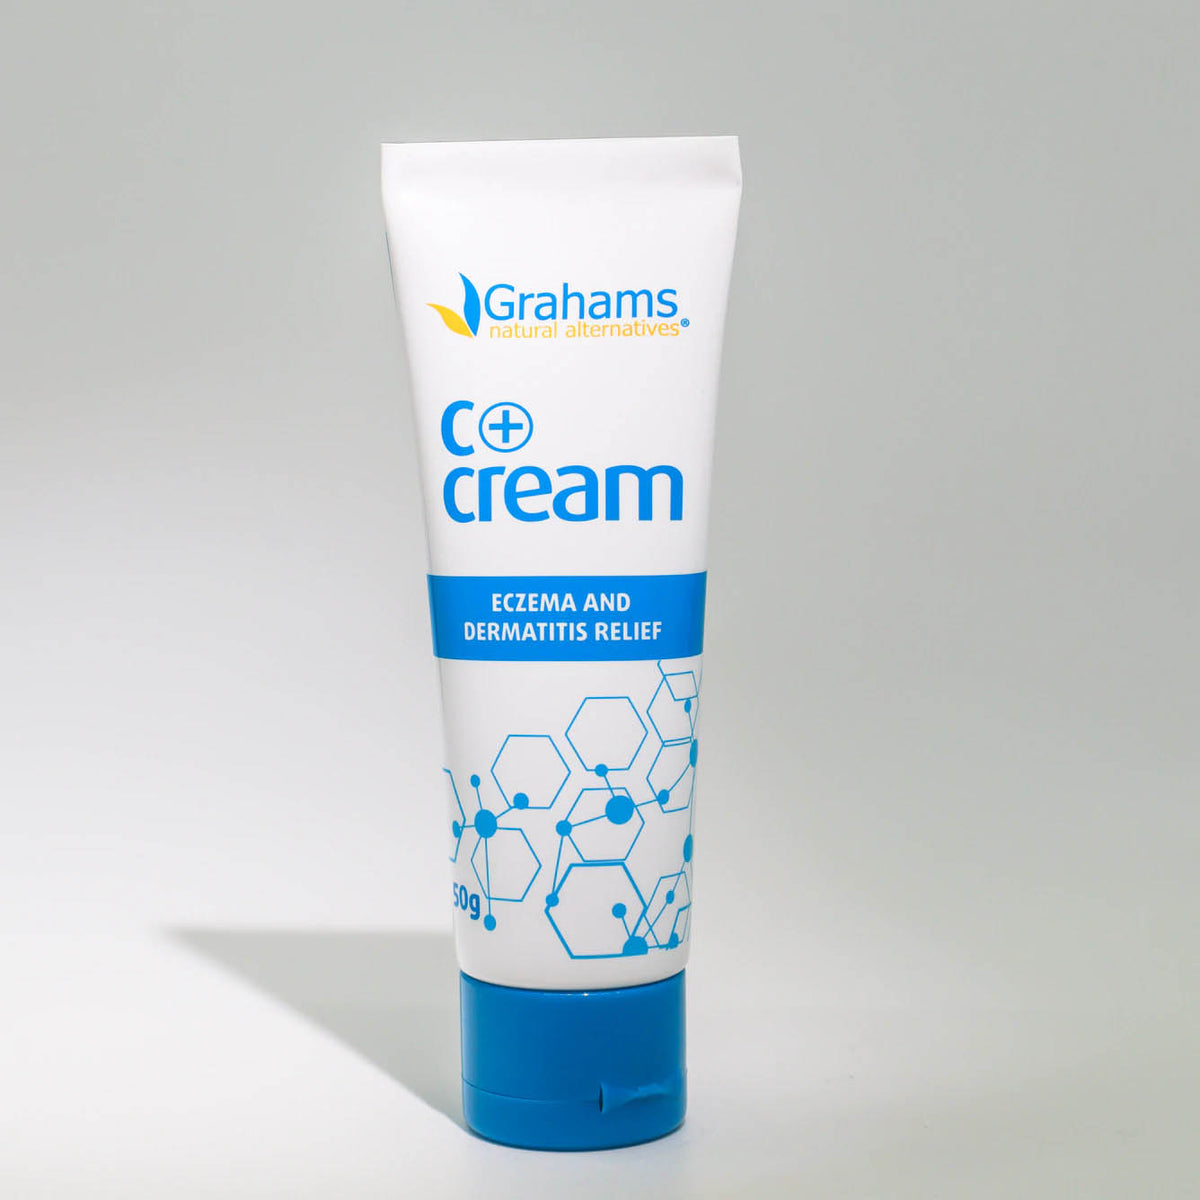 Grahams Natural C+ Eczema Cream